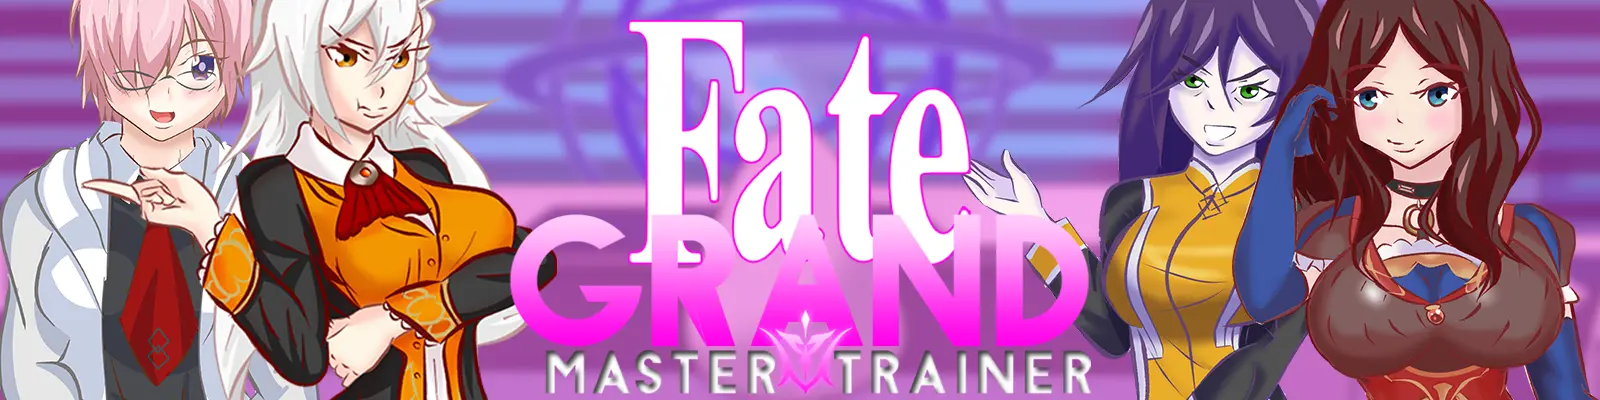 Fate Grand Master Trainer [v0.02] main image